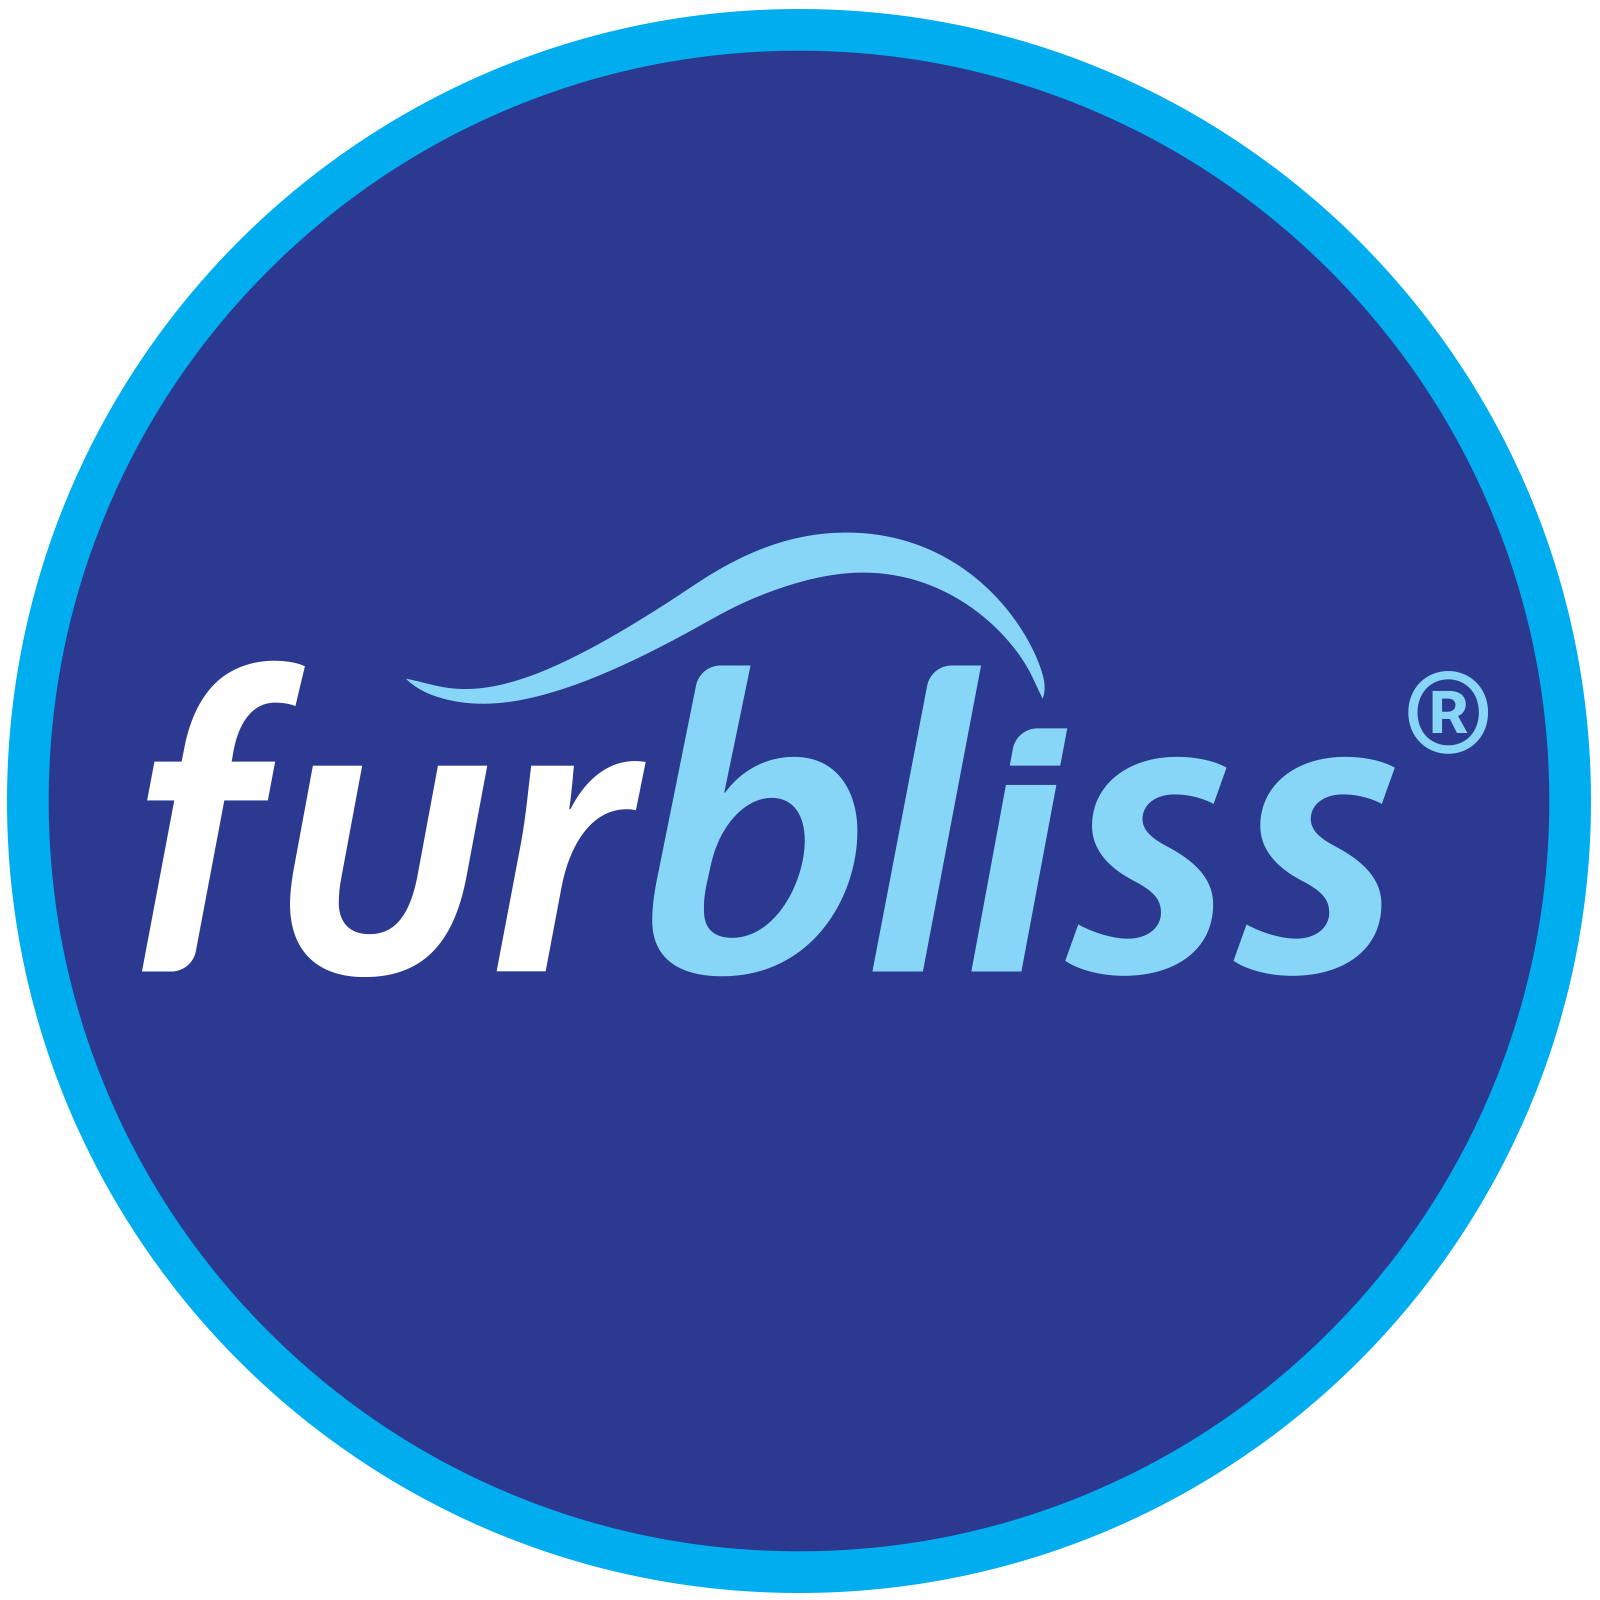 FurBliss logo